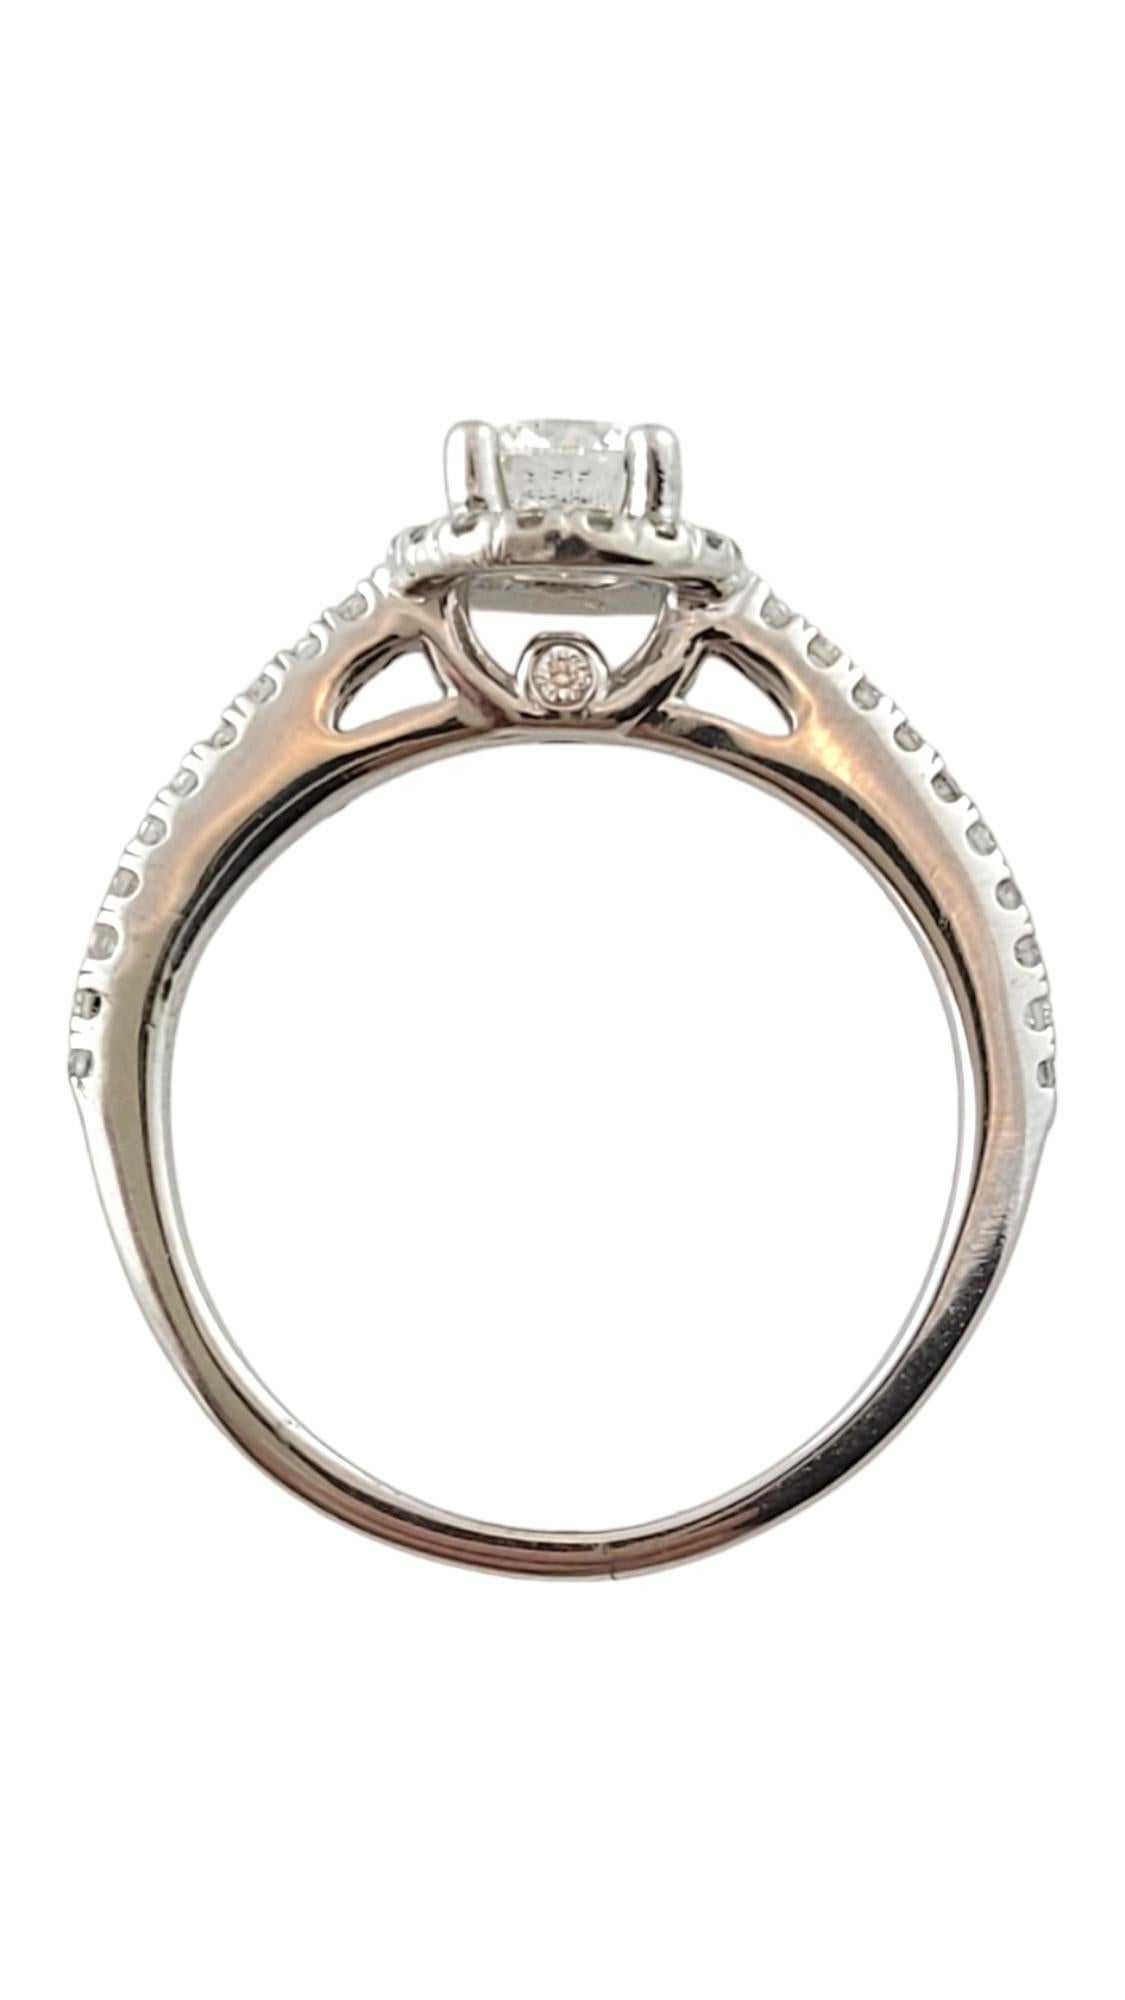 Brilliant Cut 14 Karat White Gold Diamond Engagement Ring Size 6.25 #16965 For Sale